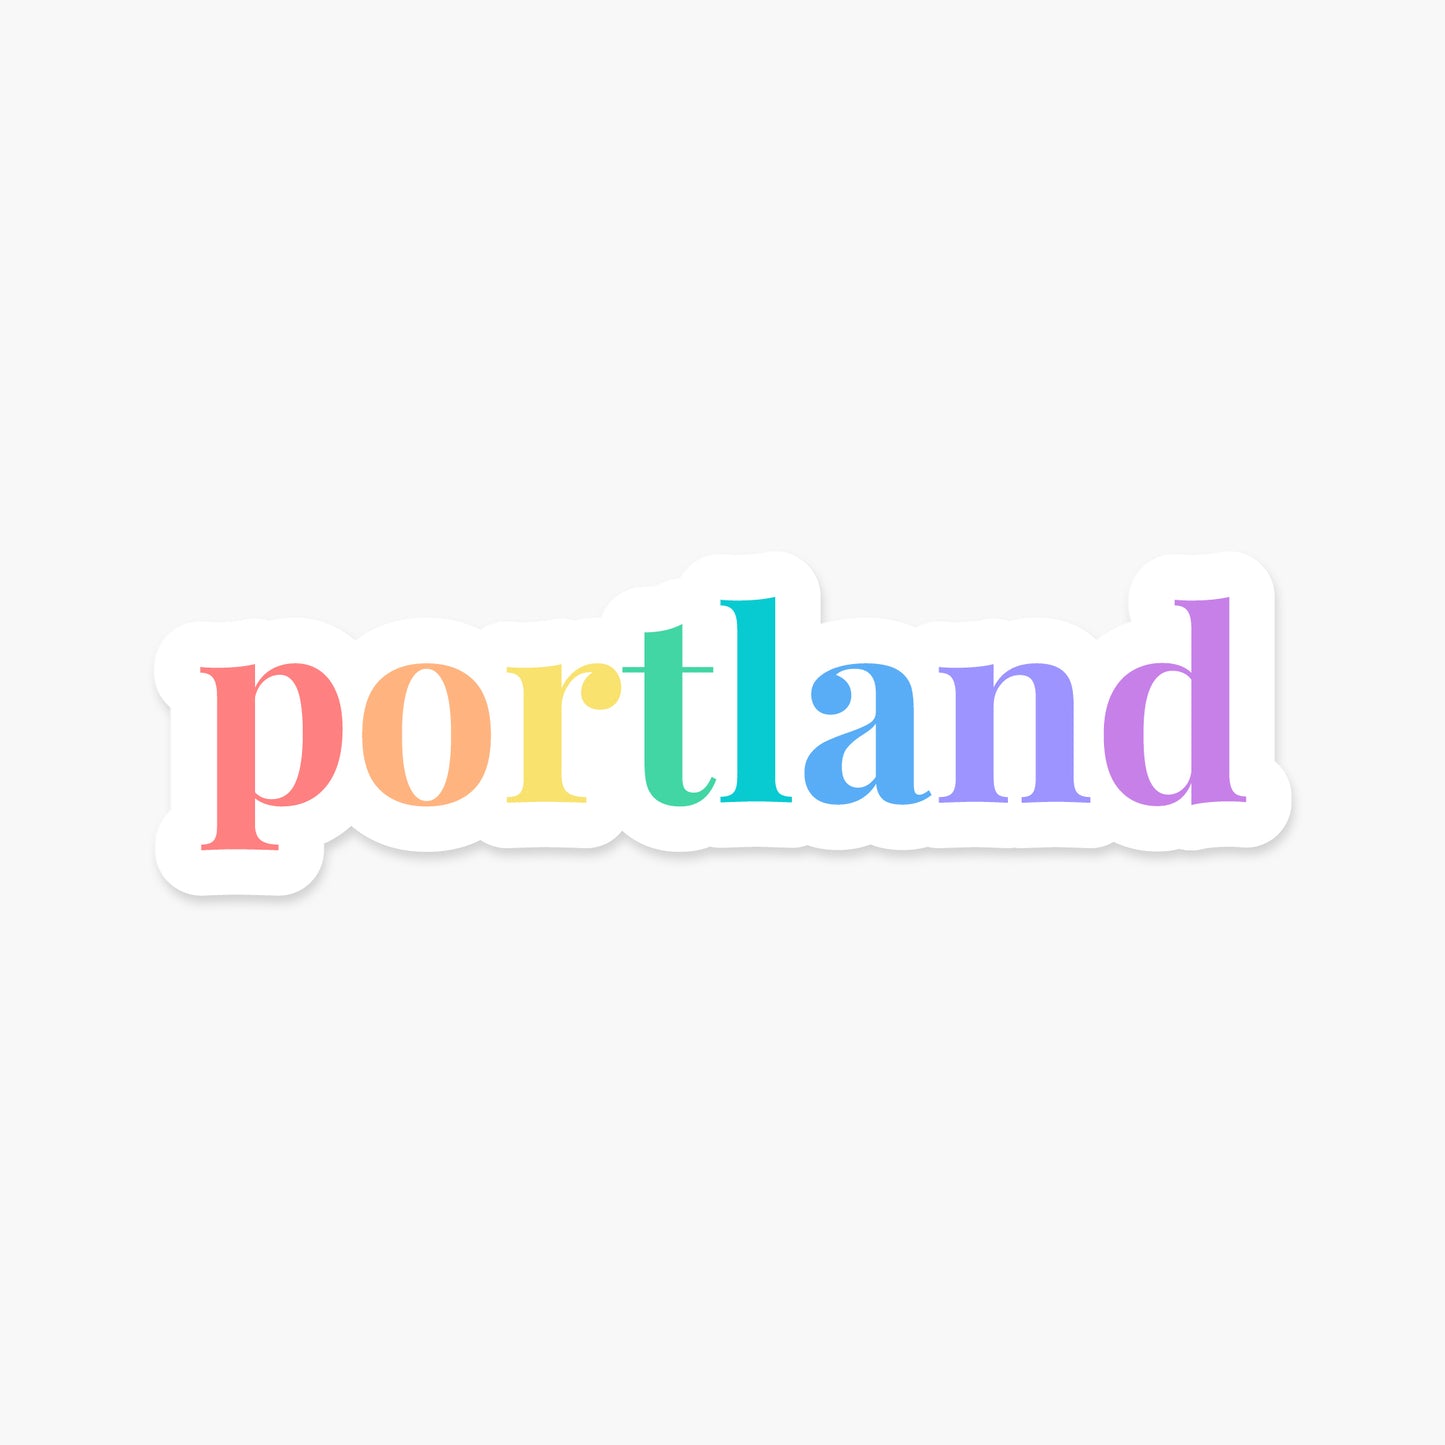 Portland, Oregon - Everyday Sticker | Footnotes Paper